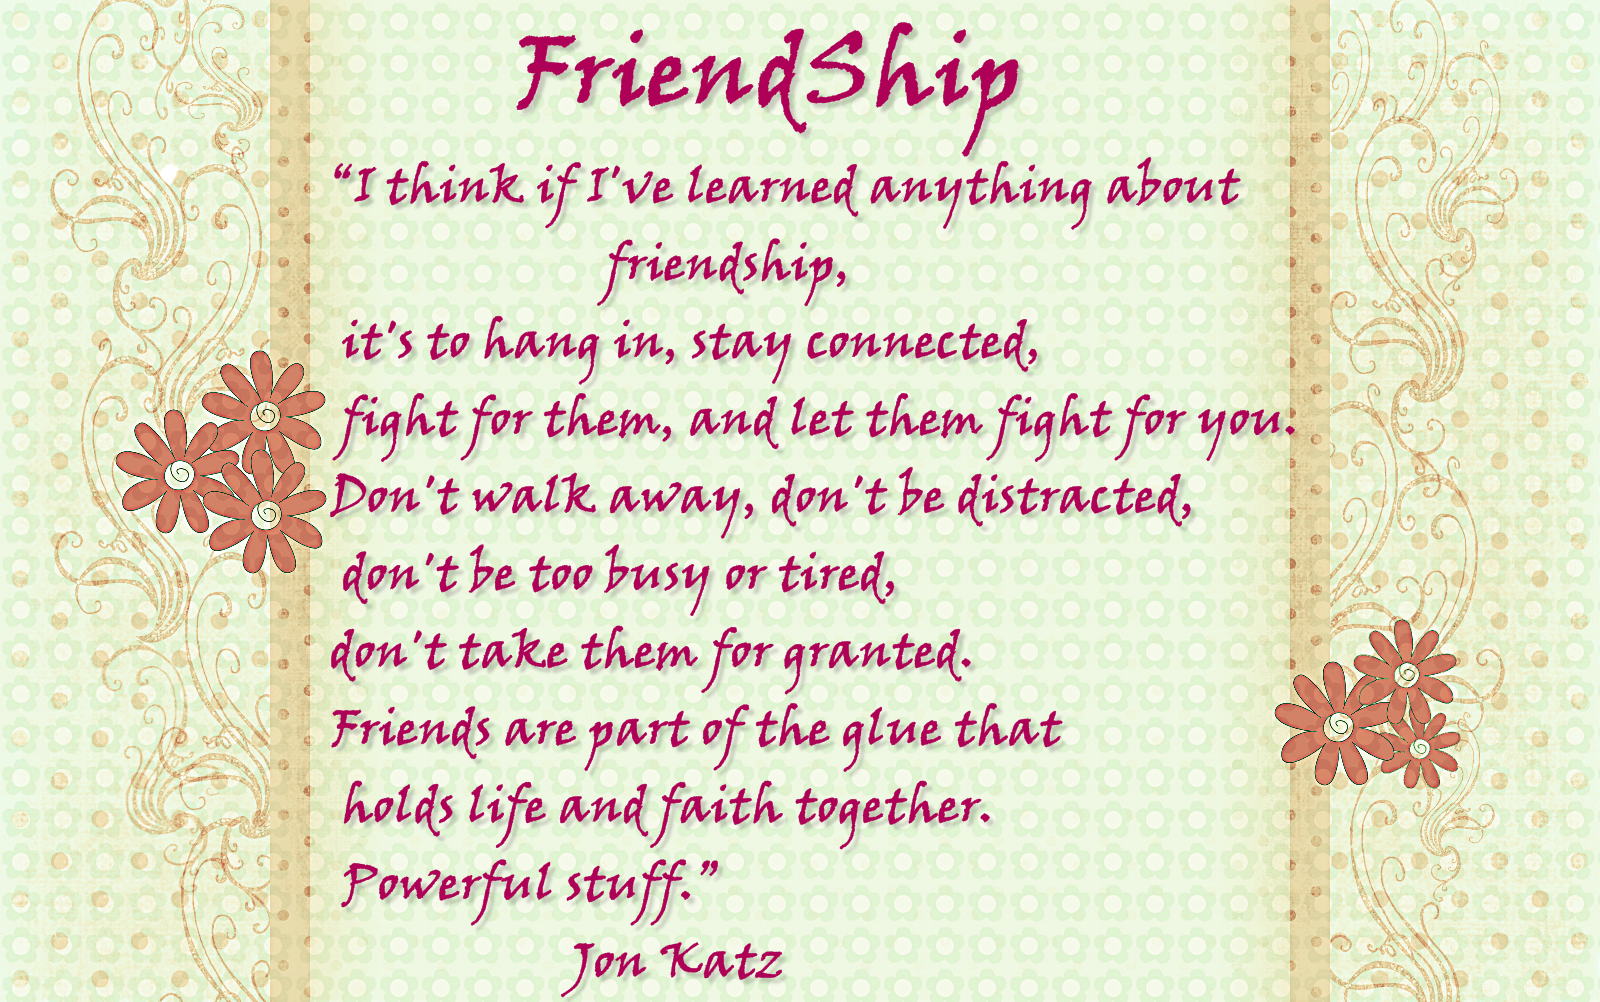 Friendship quotation